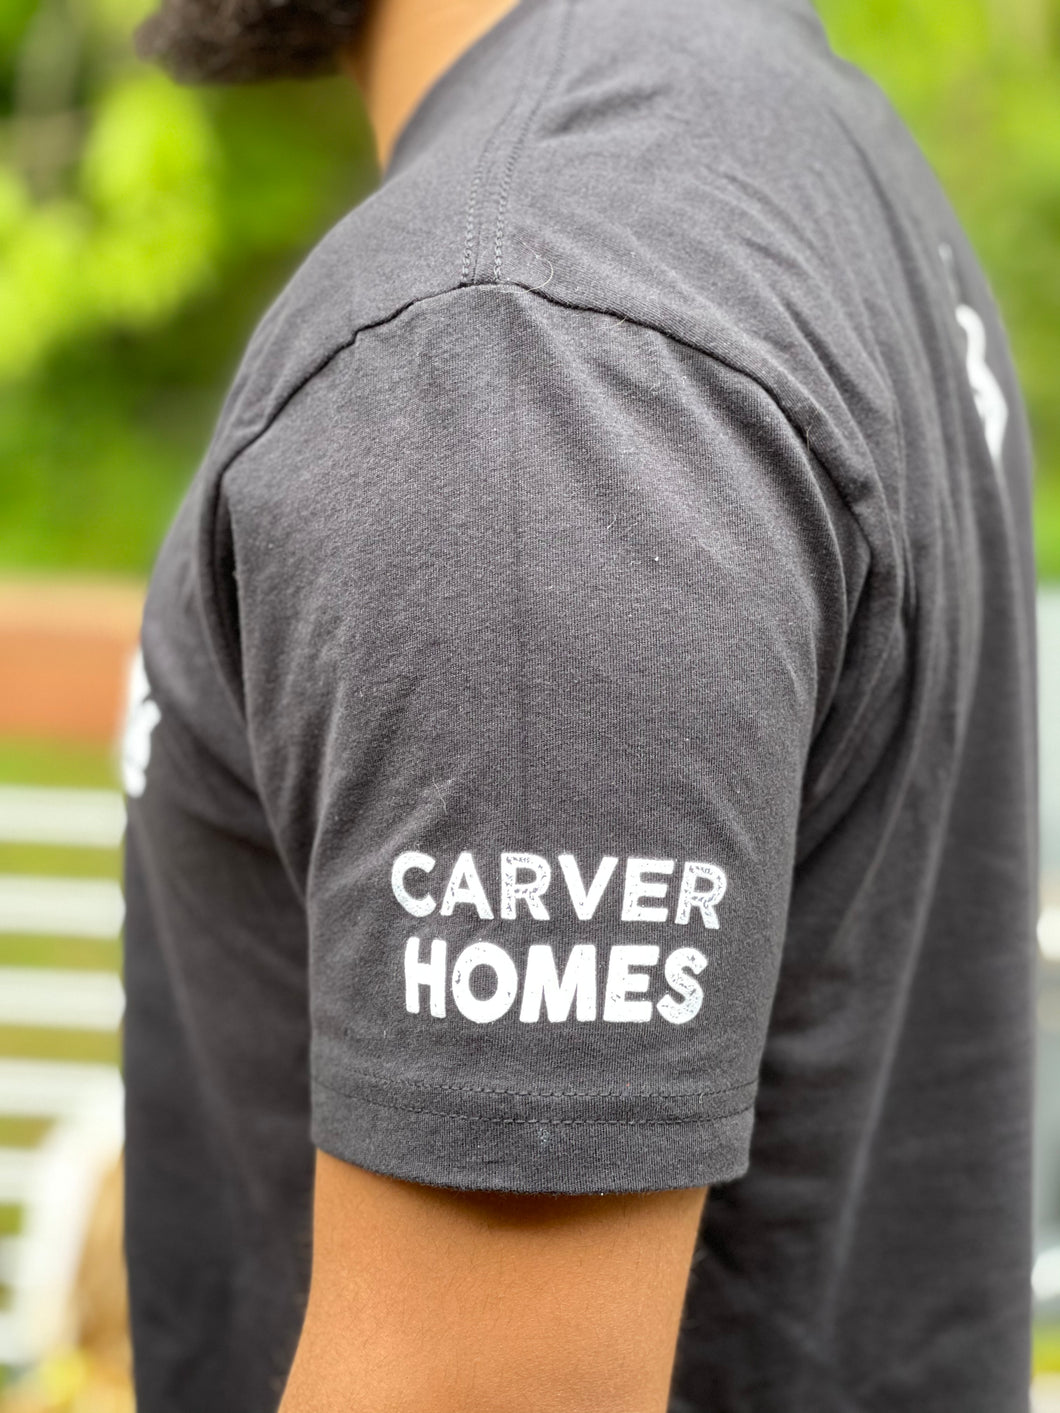 Carver Homes, Humble Beginnings Shirt